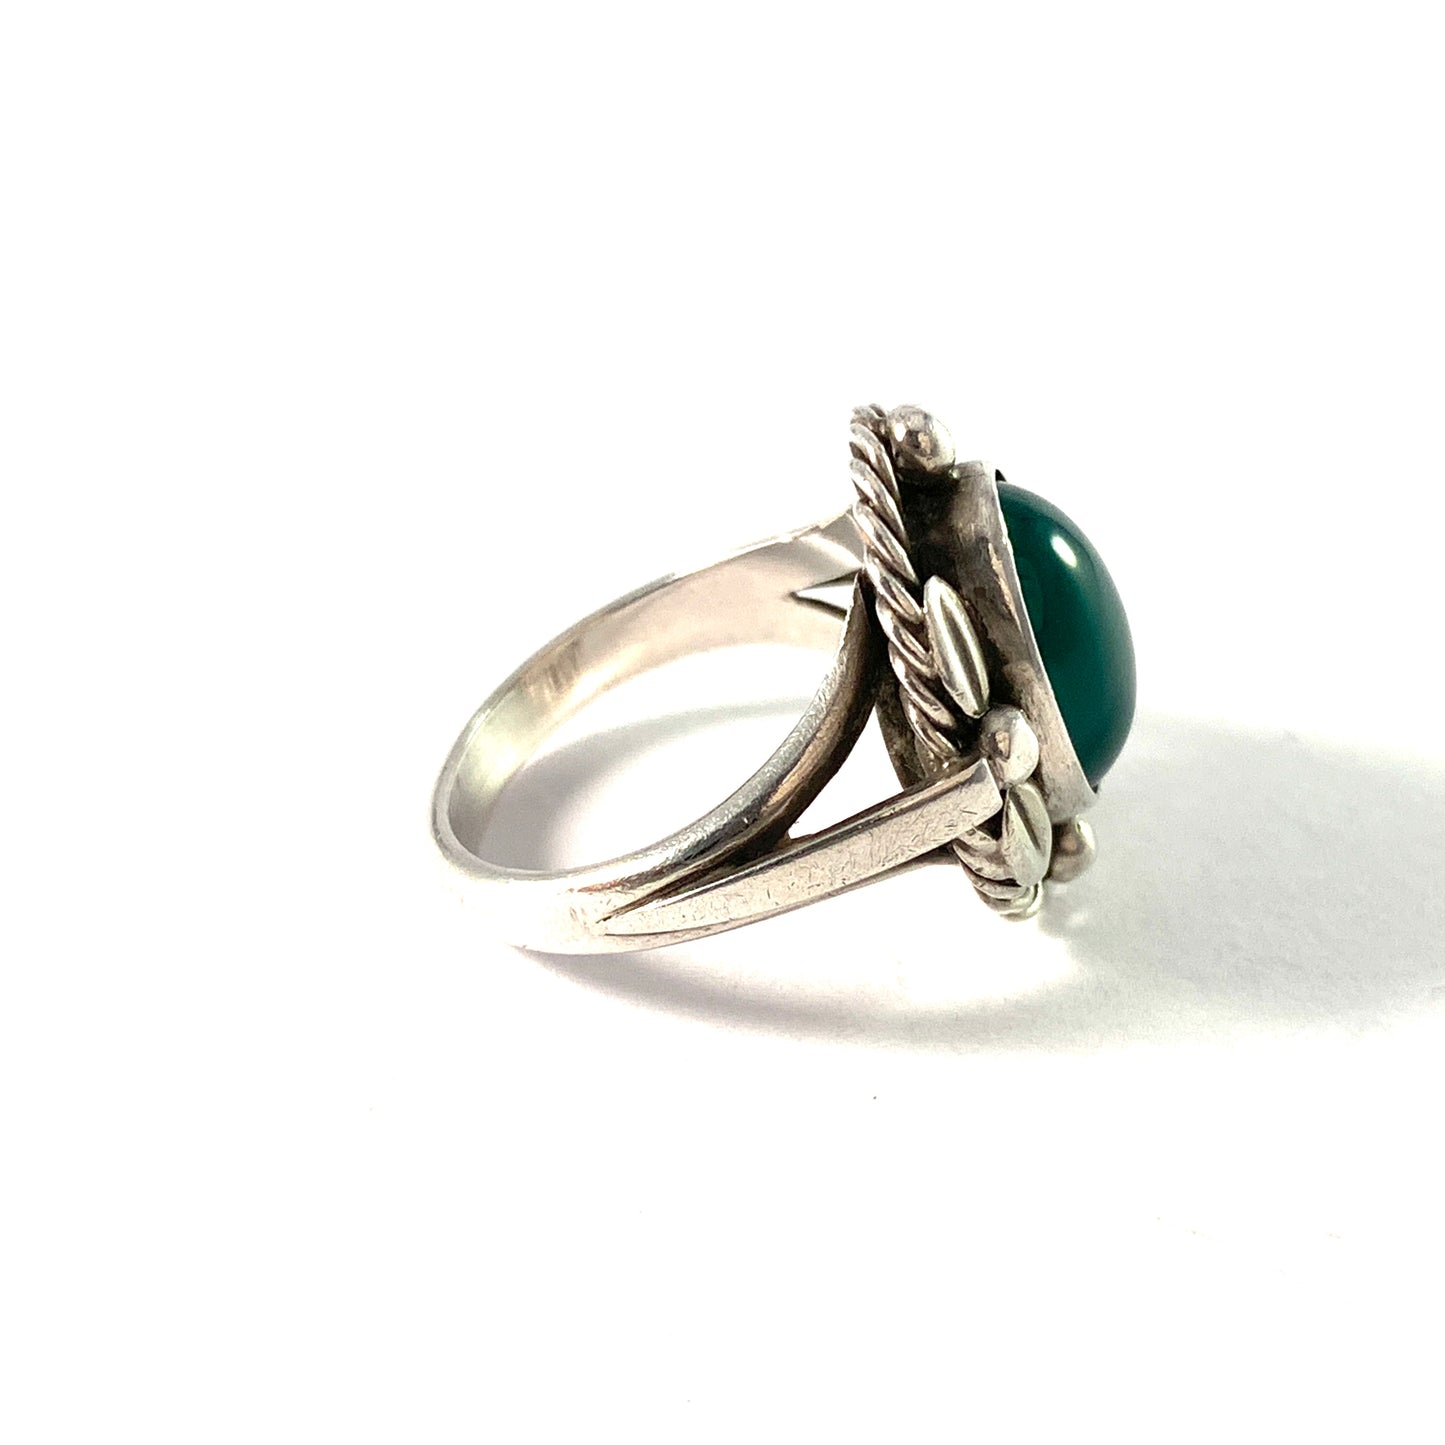 Georg Jensen, Denmark. Vintage Sterling Silver Chrysoprase Ring. Design 1A